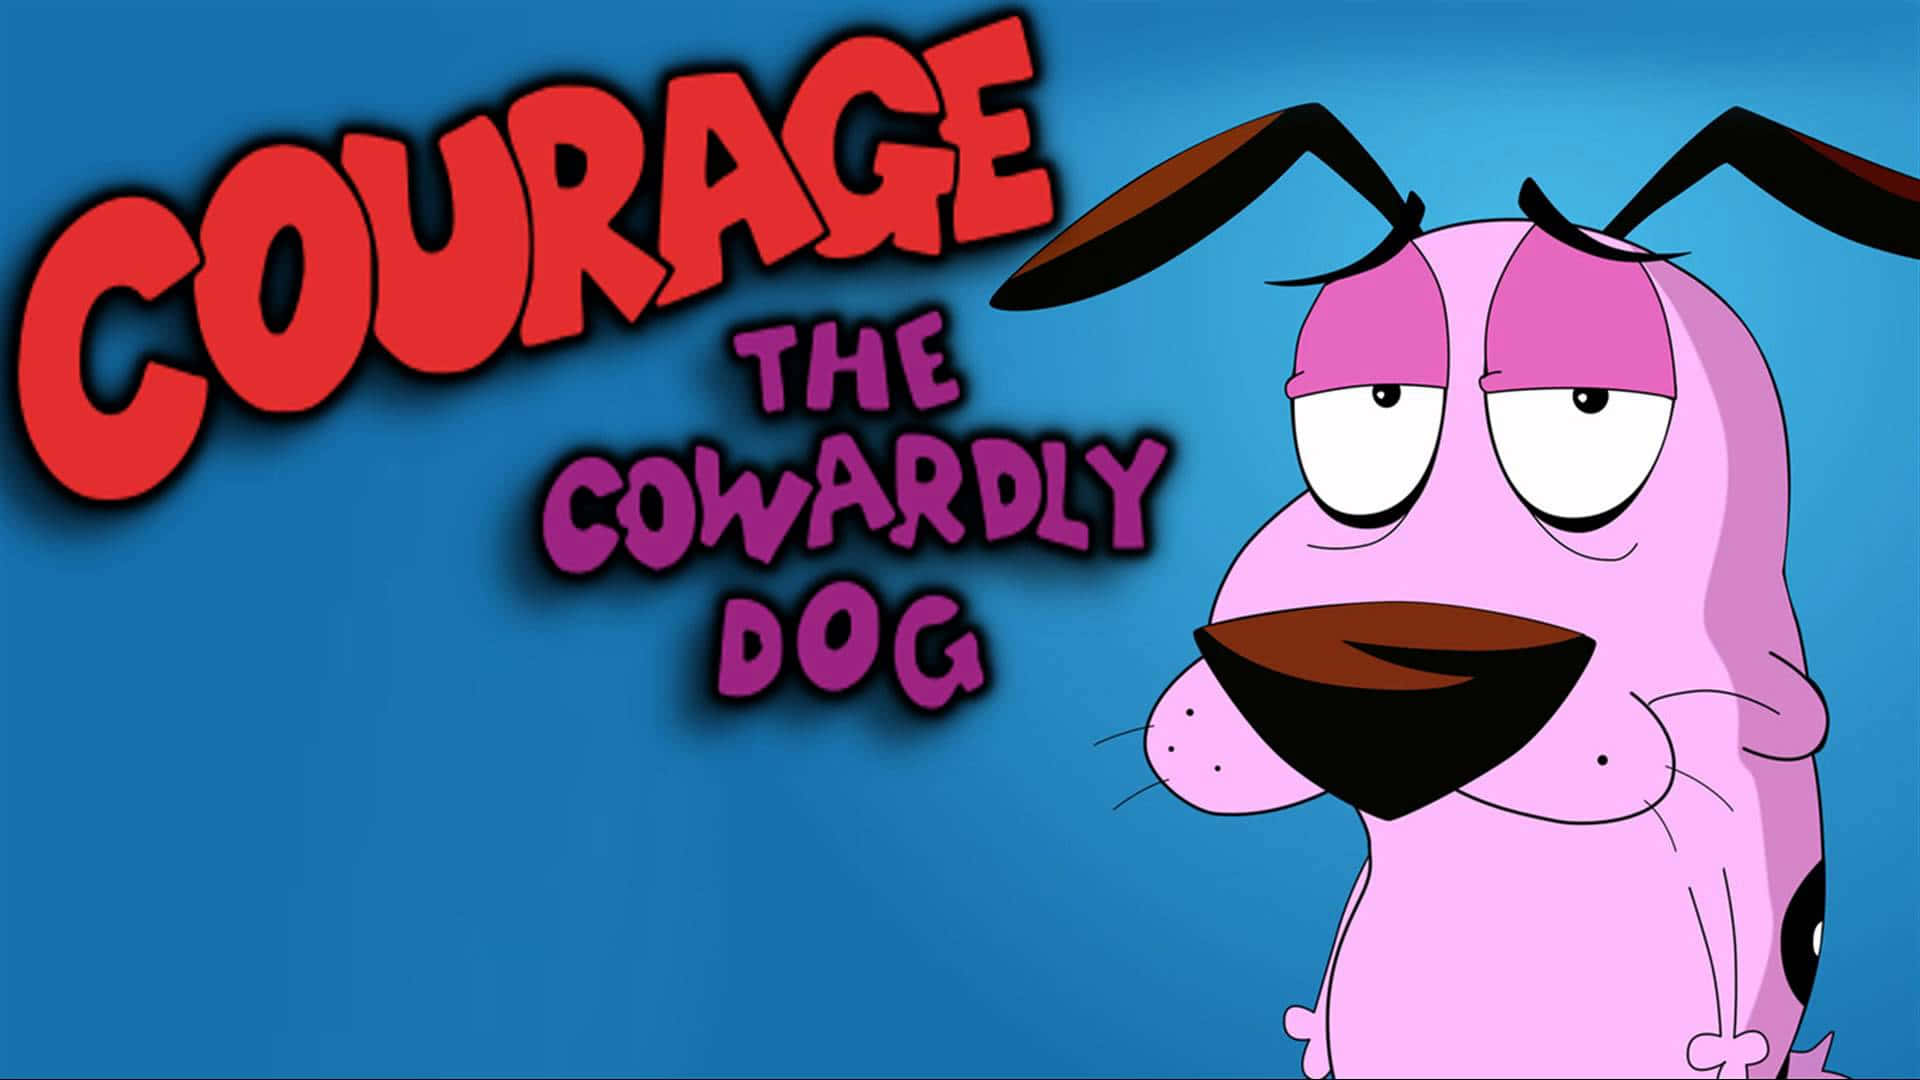 Everyone's Favorite Cartoon Dog, Courage! Background